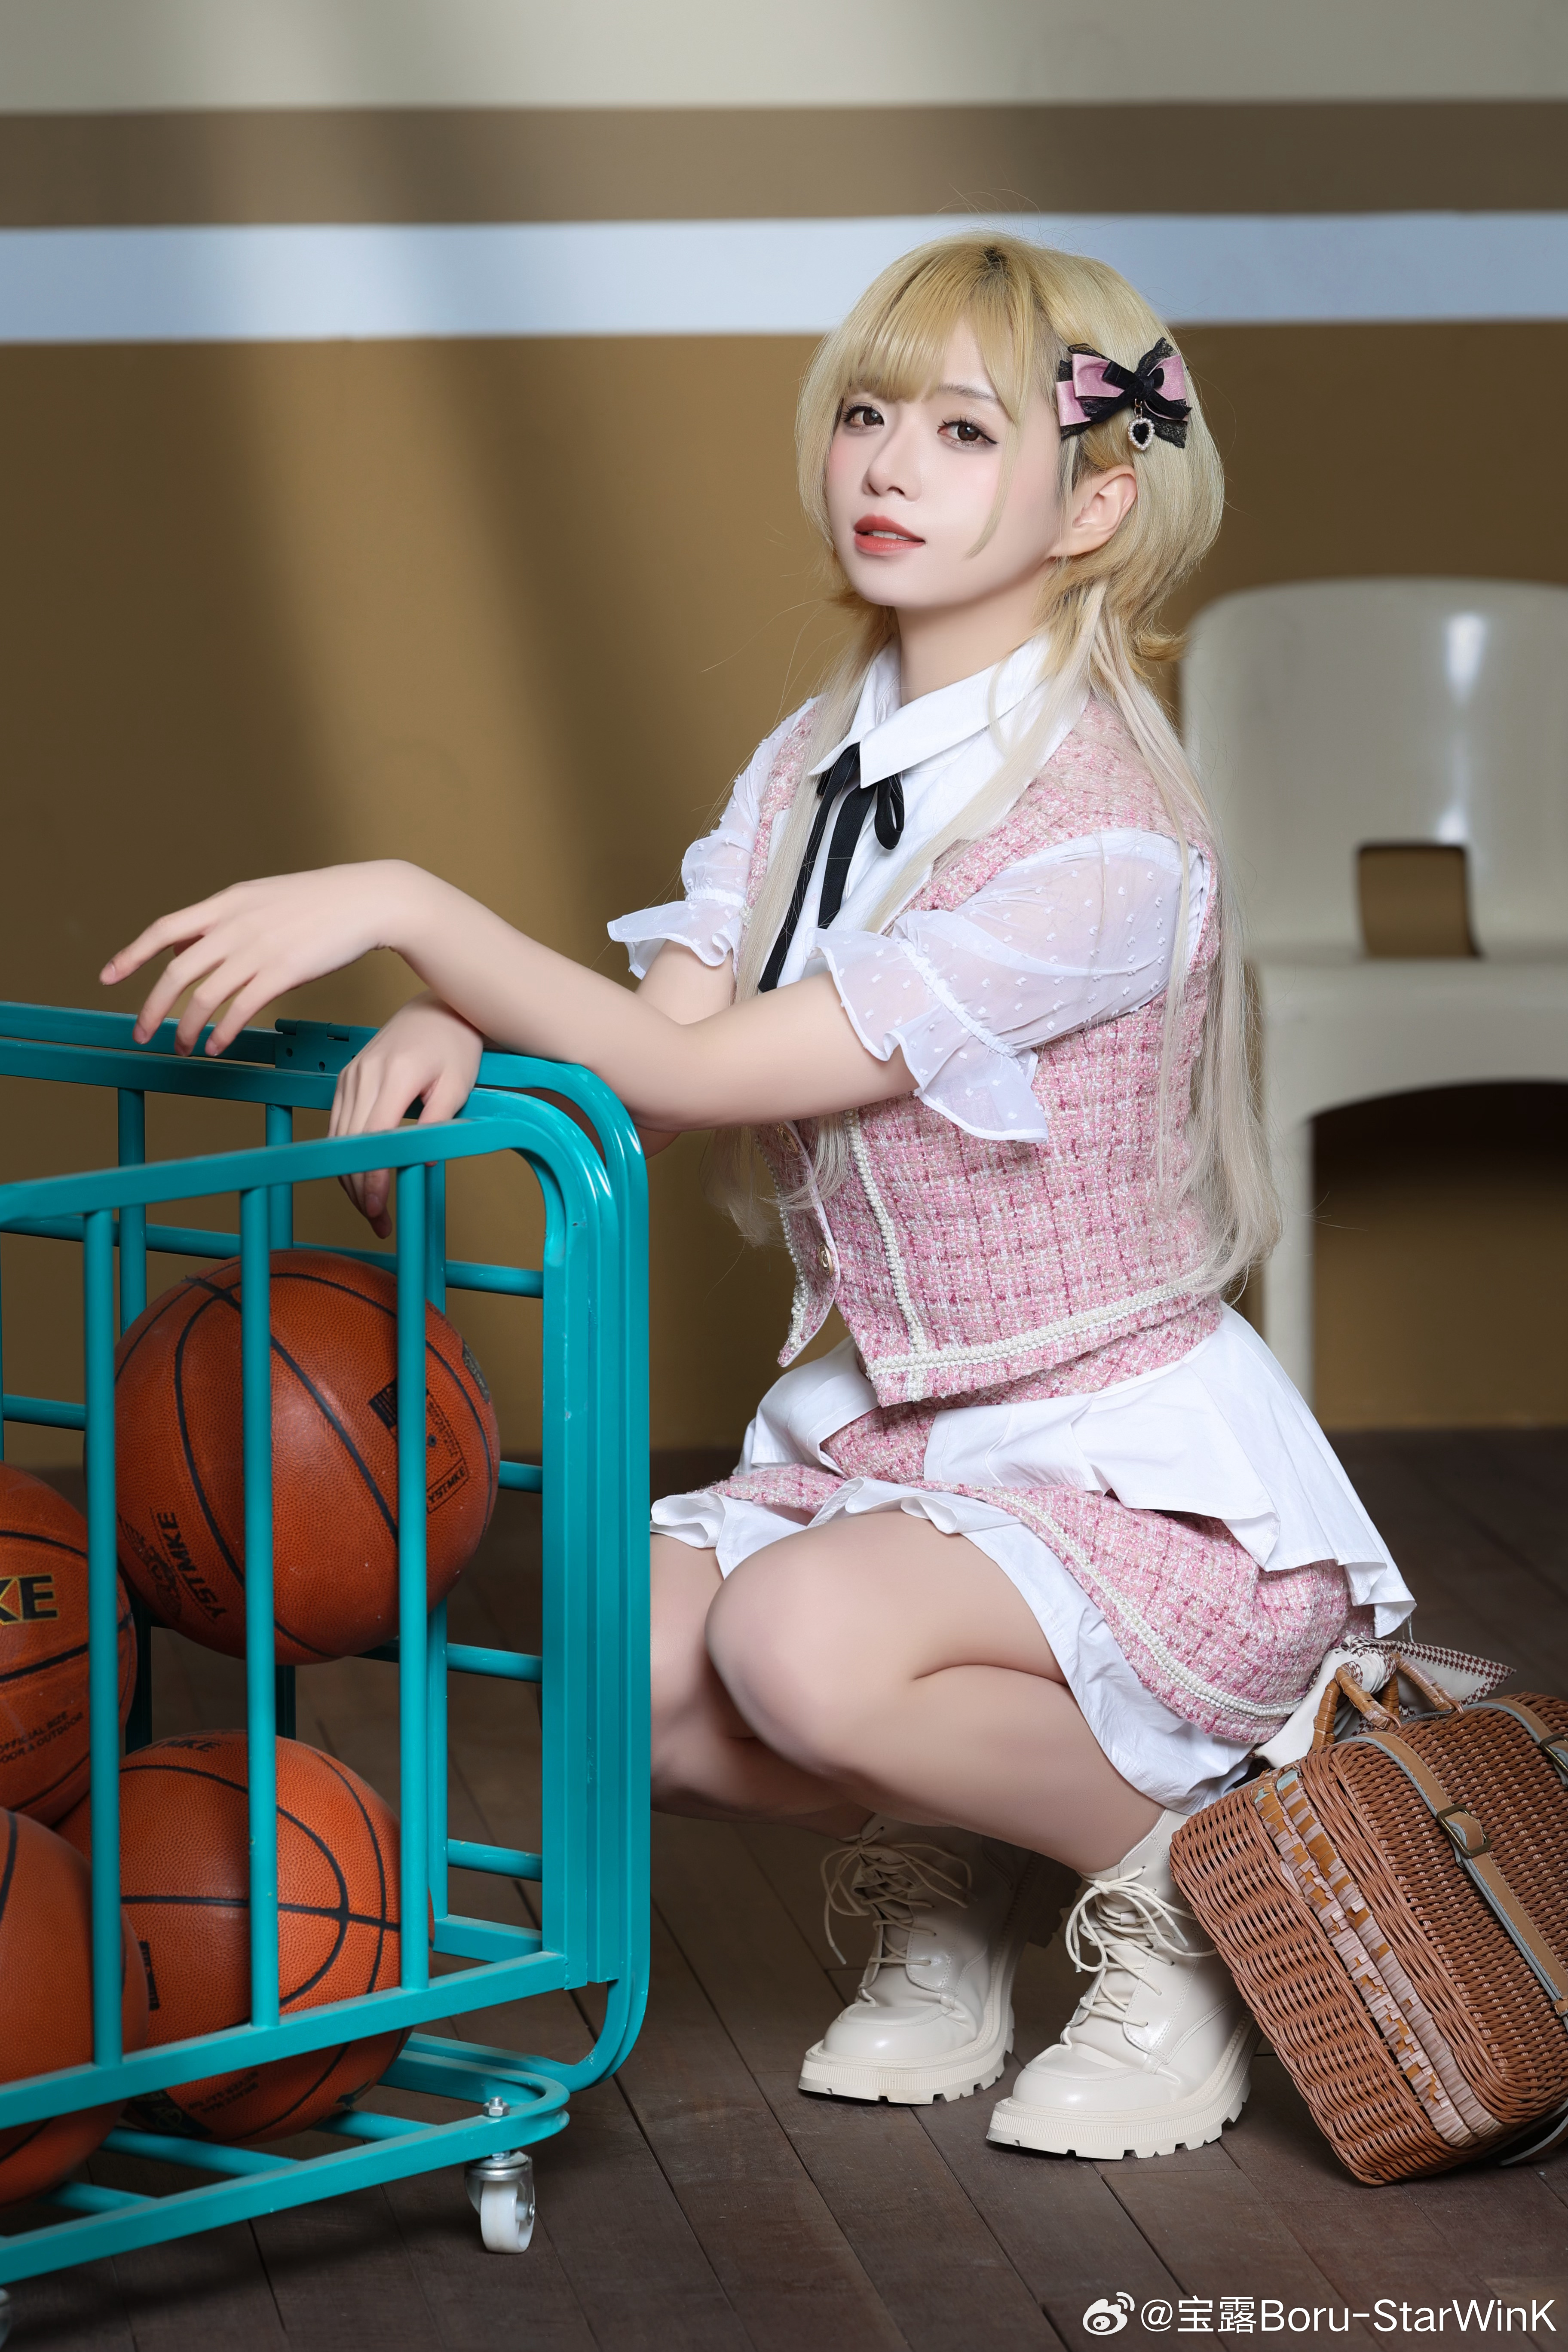 Cosplay Women Asian Basketball Boru StarWinK Long Hair Parted Lips Blonde Squatting Wooden Floor Loo 3648x5472